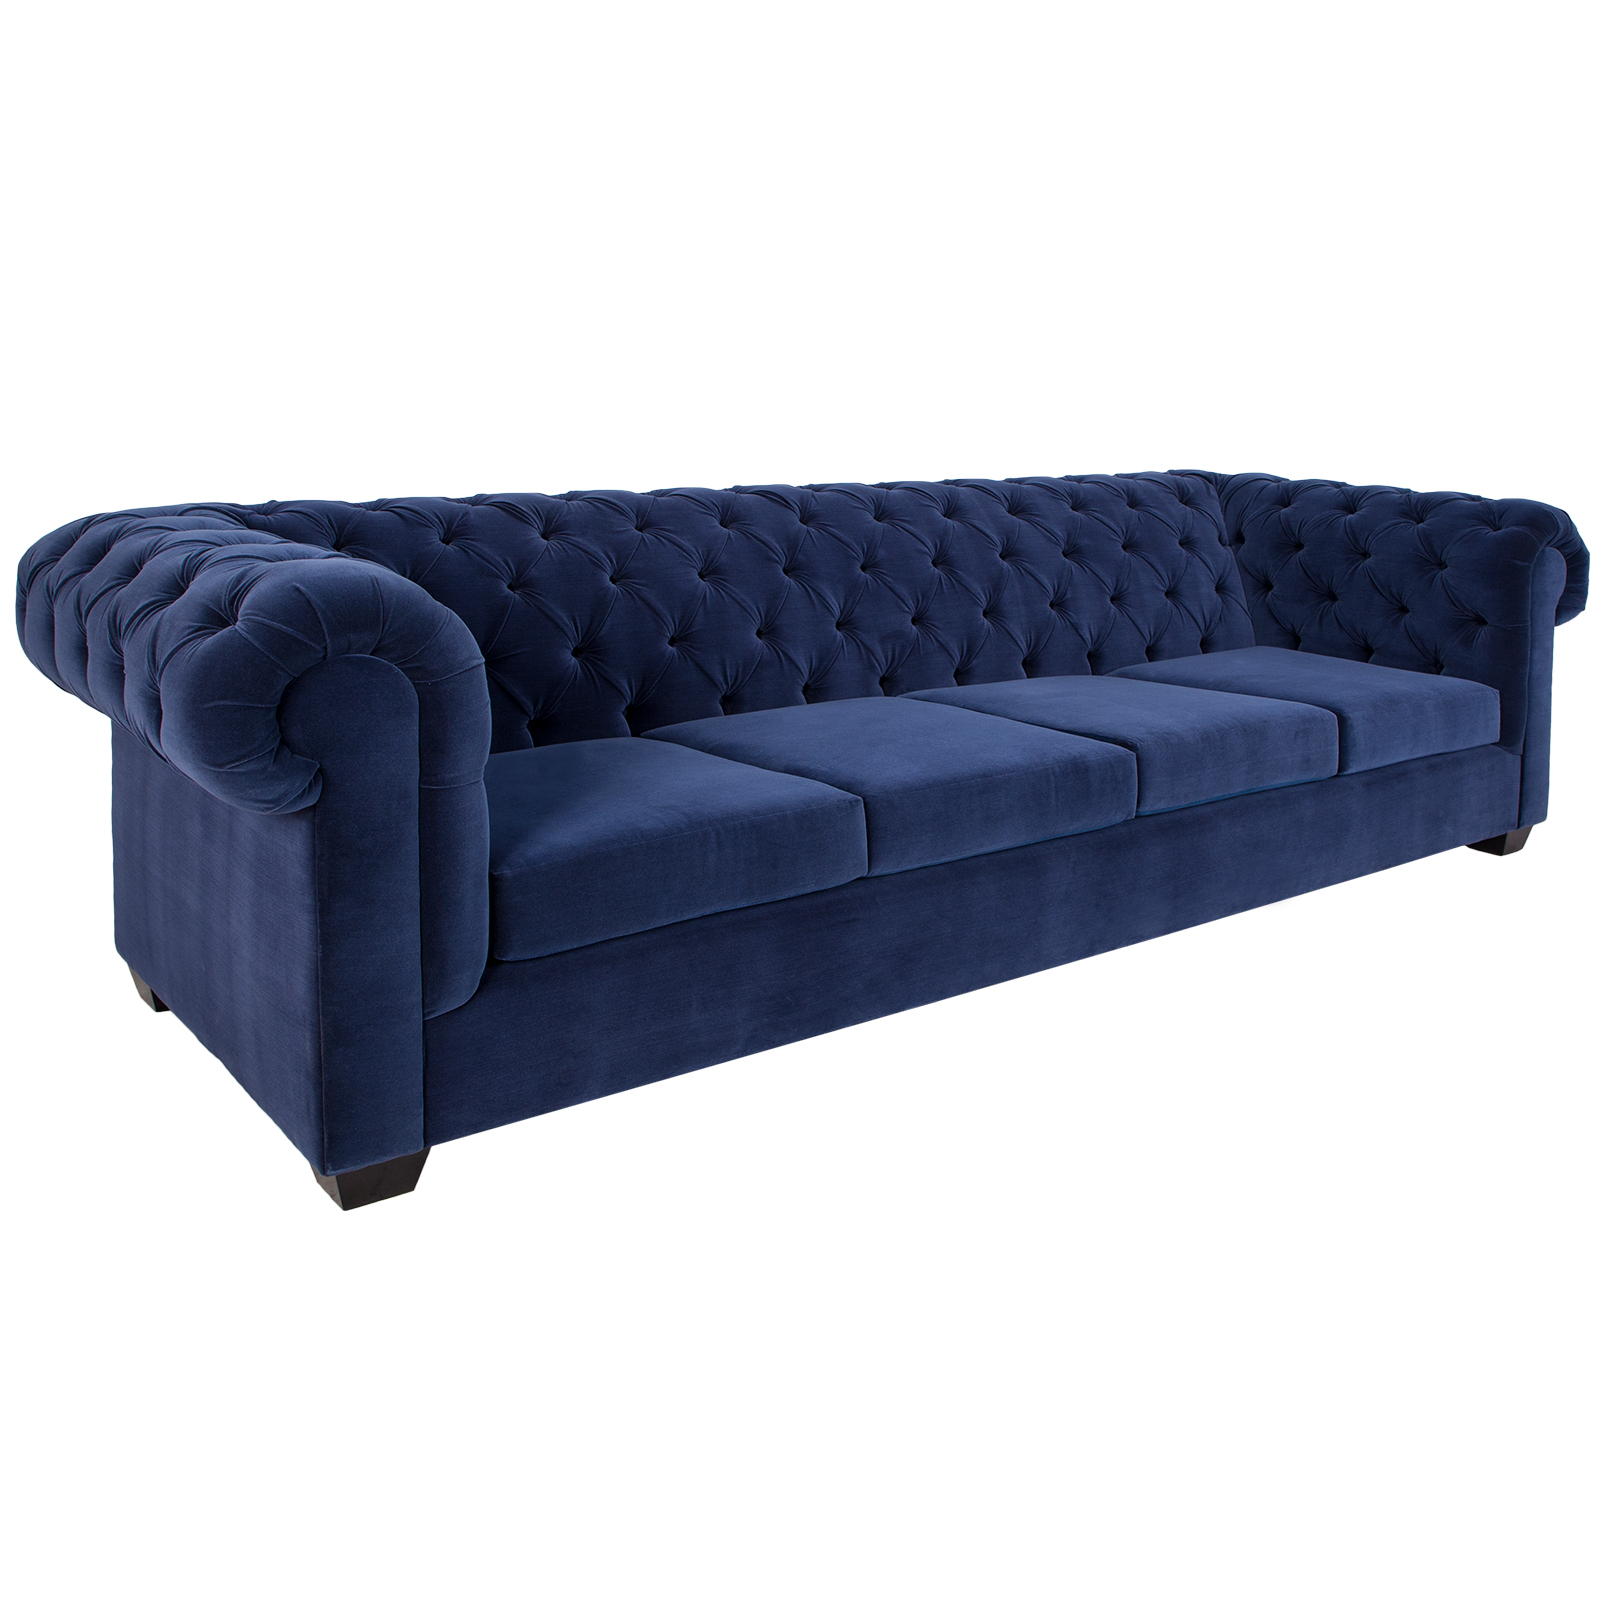 Blue Chesterfield Sofa Rentals Event Furniture Rental